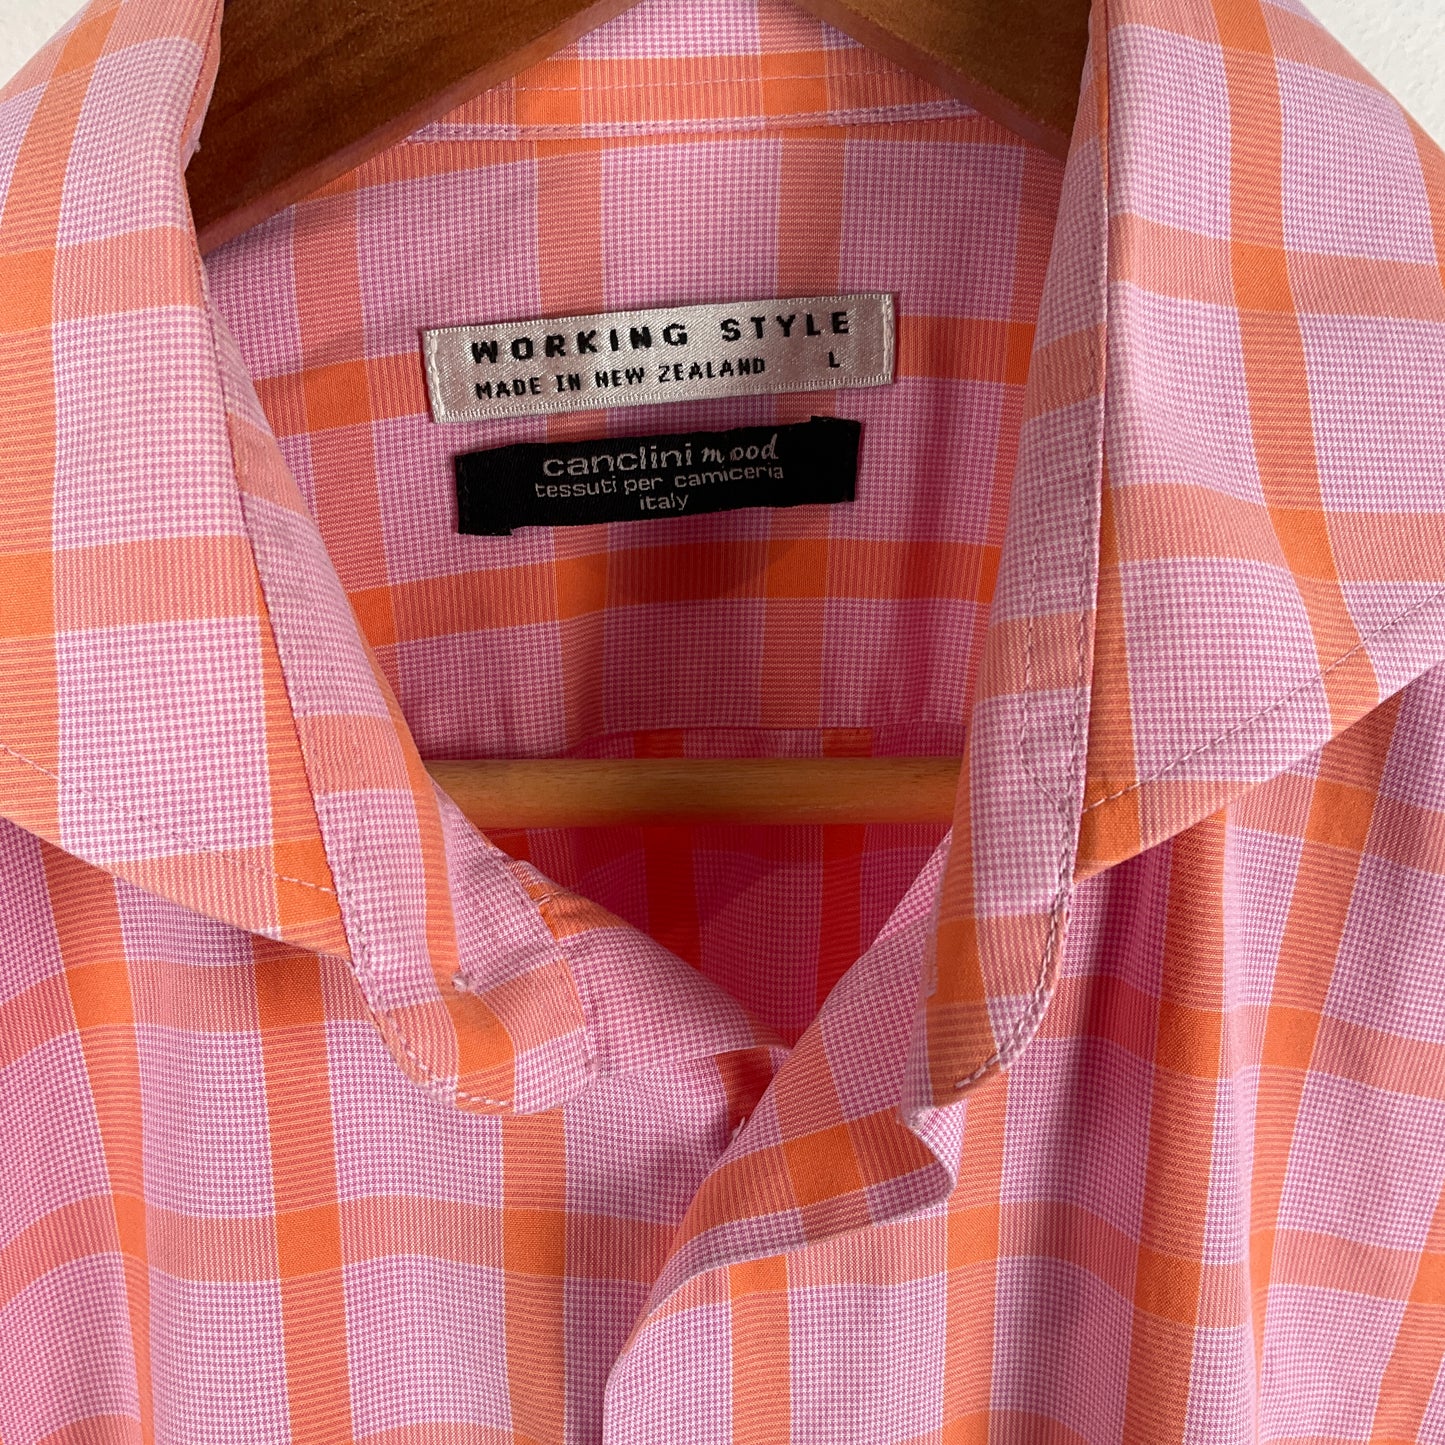 Working Style - Orange/Pink Long Sleeve Shirt